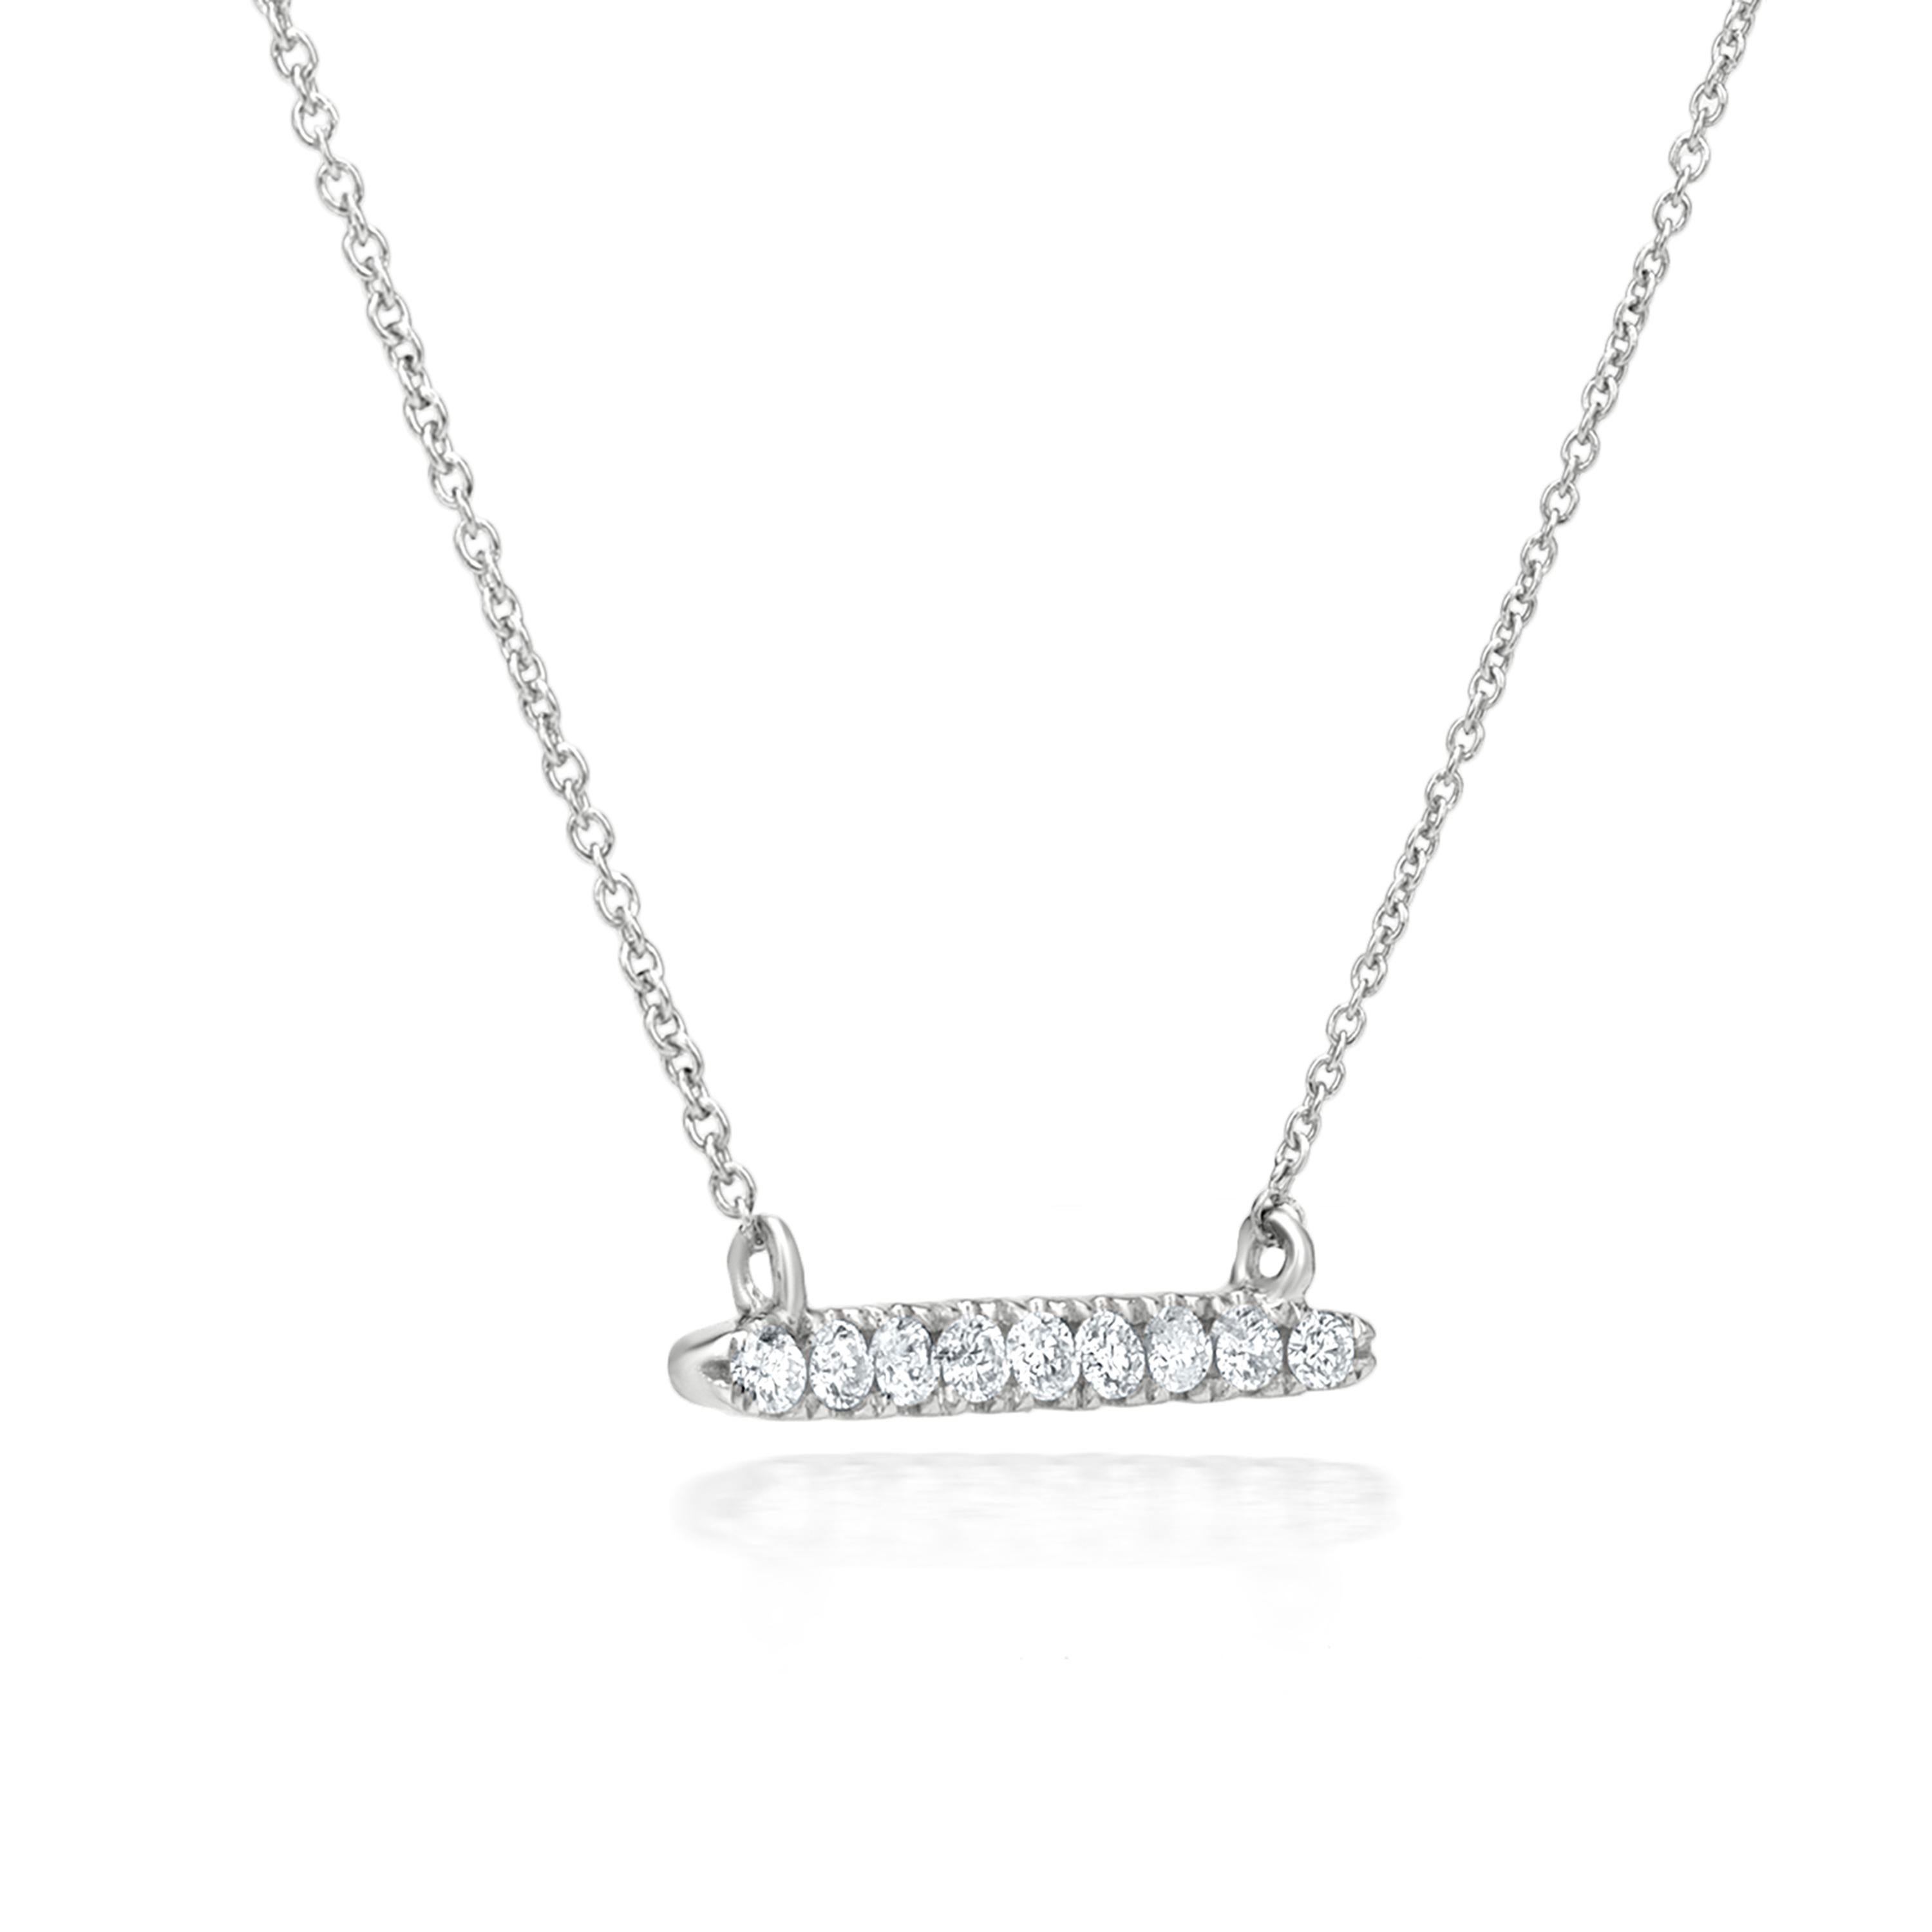 Contemporary Luxle Bar Diamond Pendant Necklace in 18K White Gold